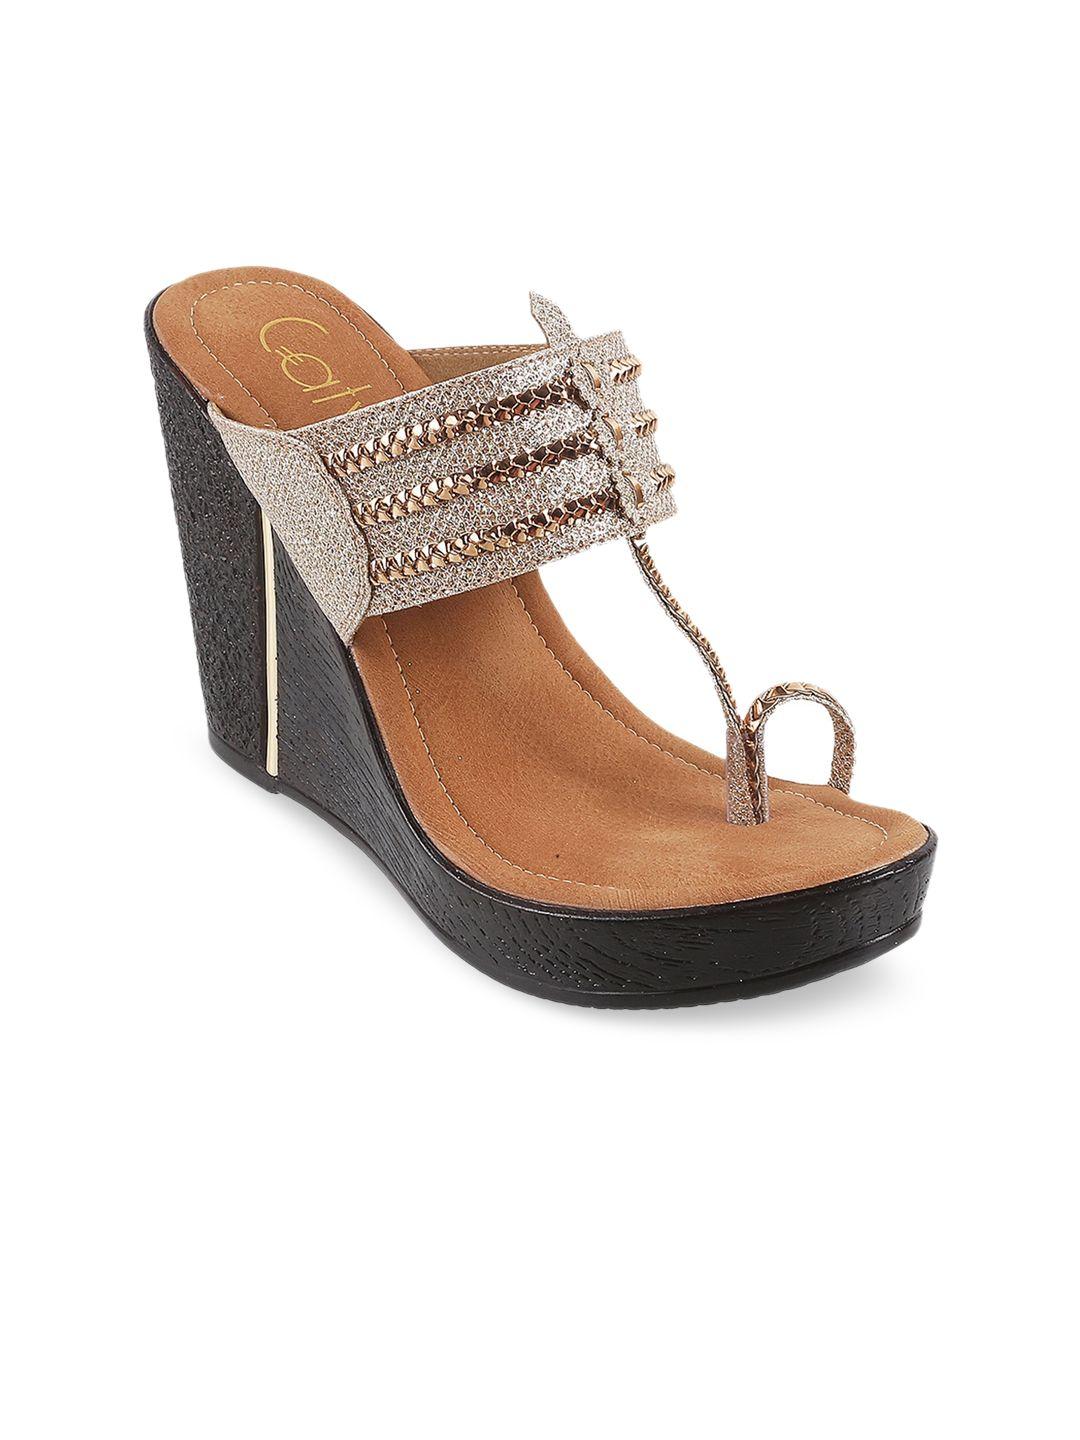 catwalk-embellished-one-toe-wedge-heels